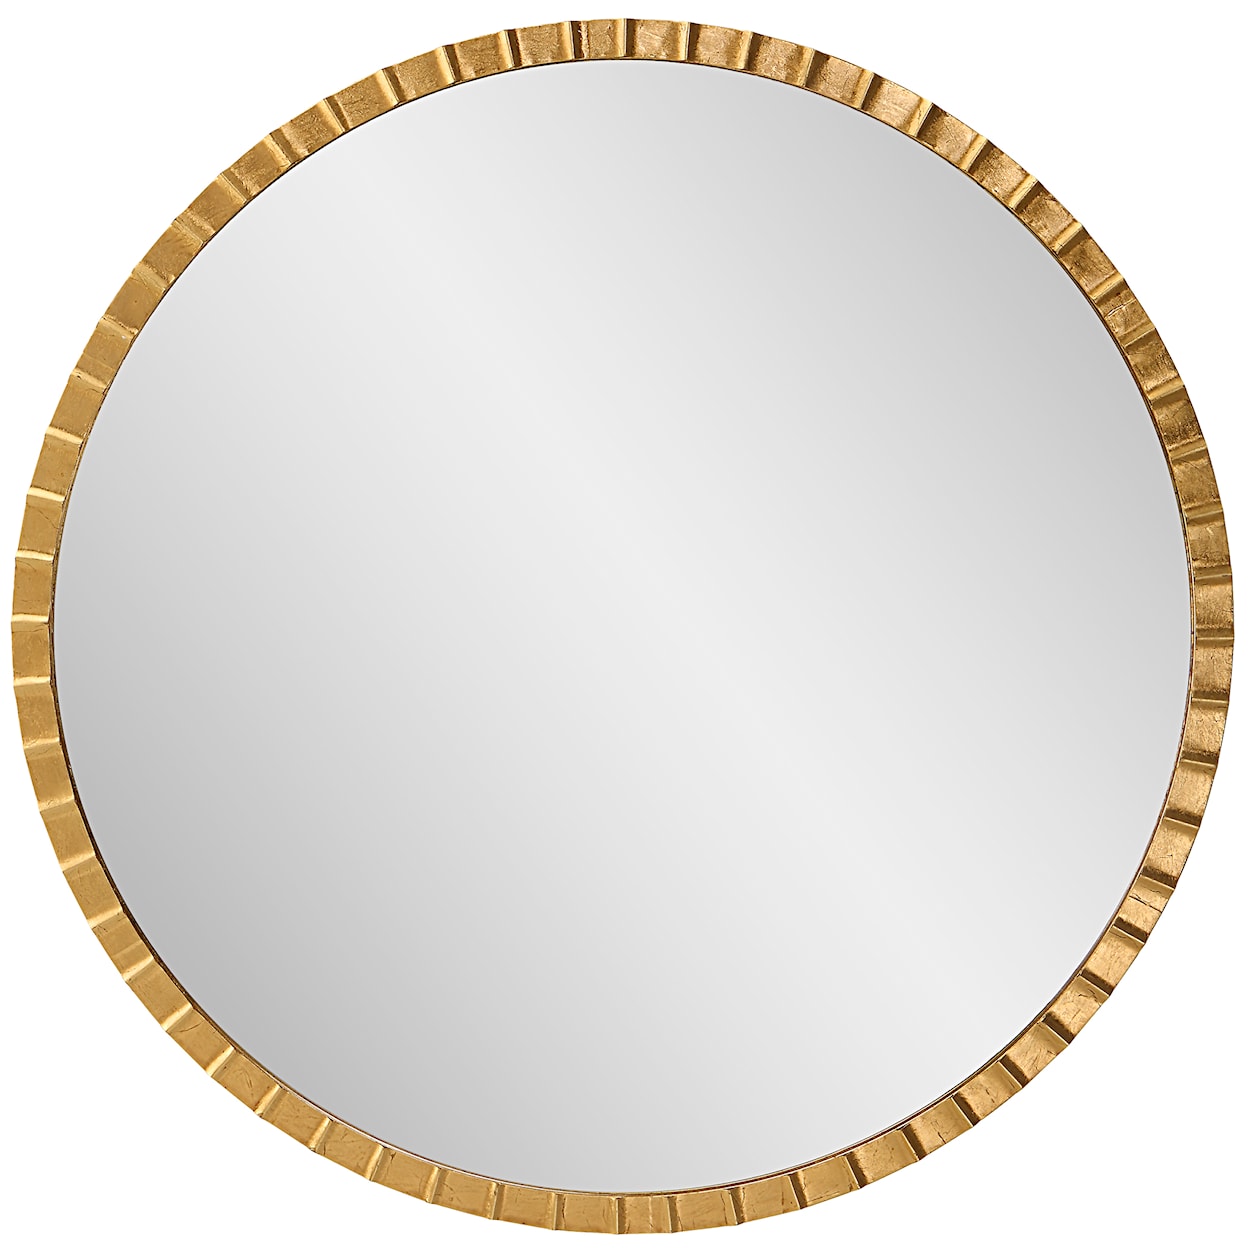 Uttermost Dandridge Dandridge Gold Round Mirror